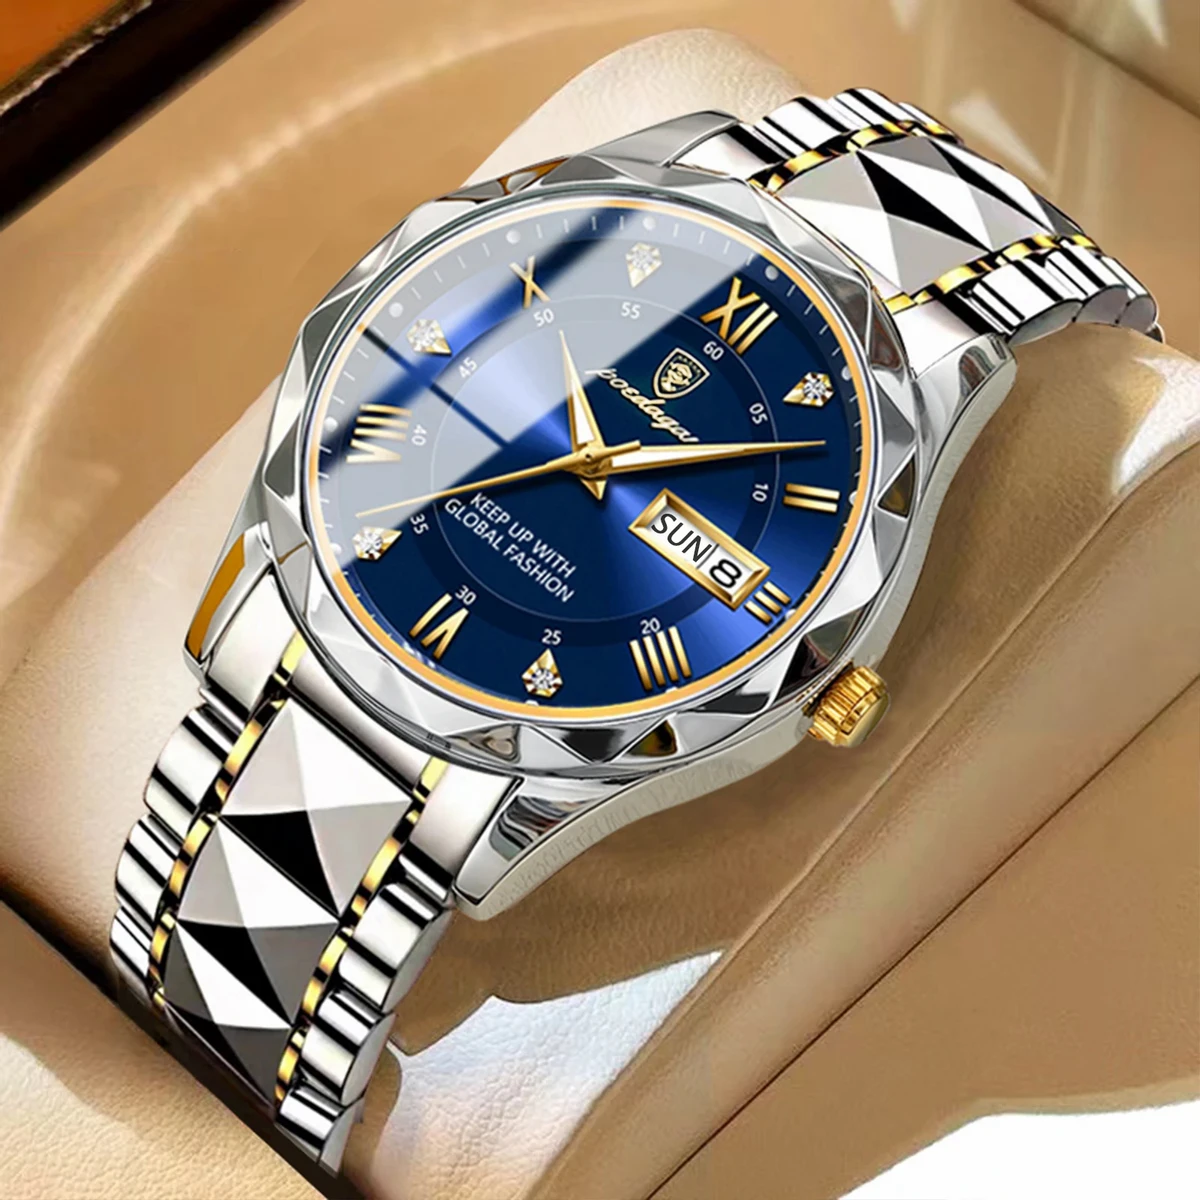 POEDAGAR Luxury Men Watches Business Top Brand Man Wristwatch Waterproof Luminous Date Week Quartz Men's Watch High Quality+Box-Silver&Blue